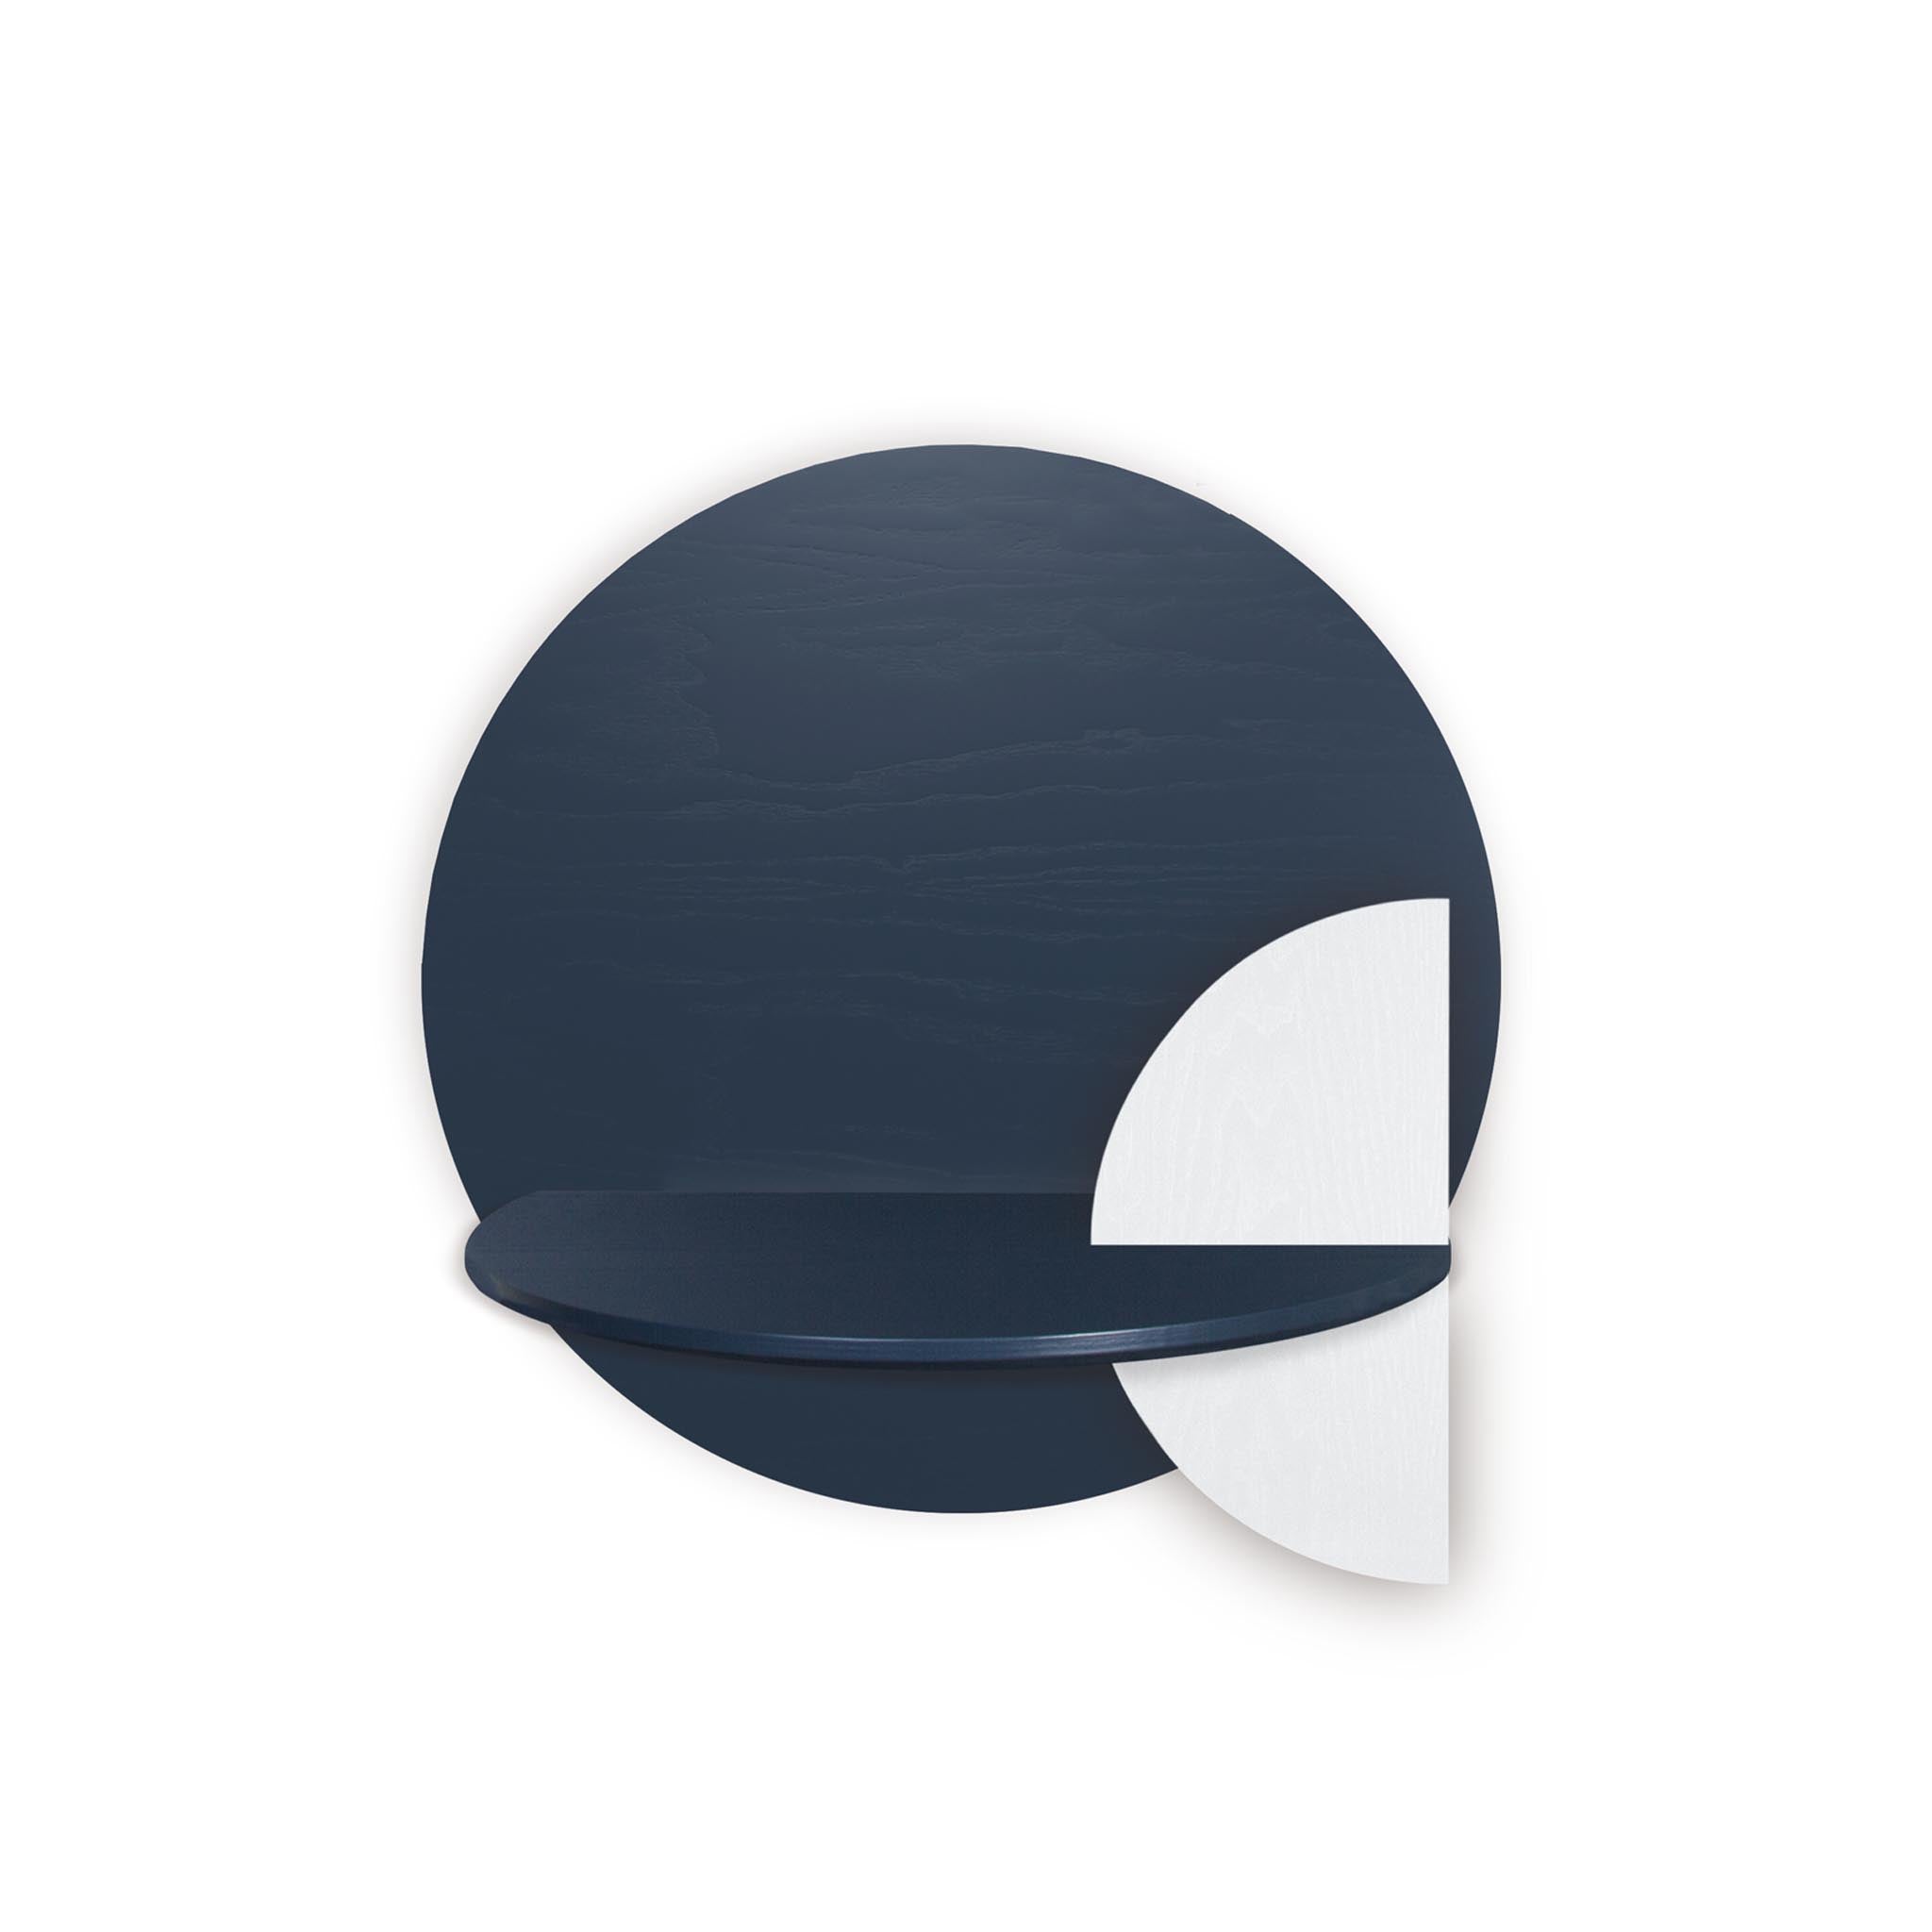 Alba floating nightstand · Blue circle